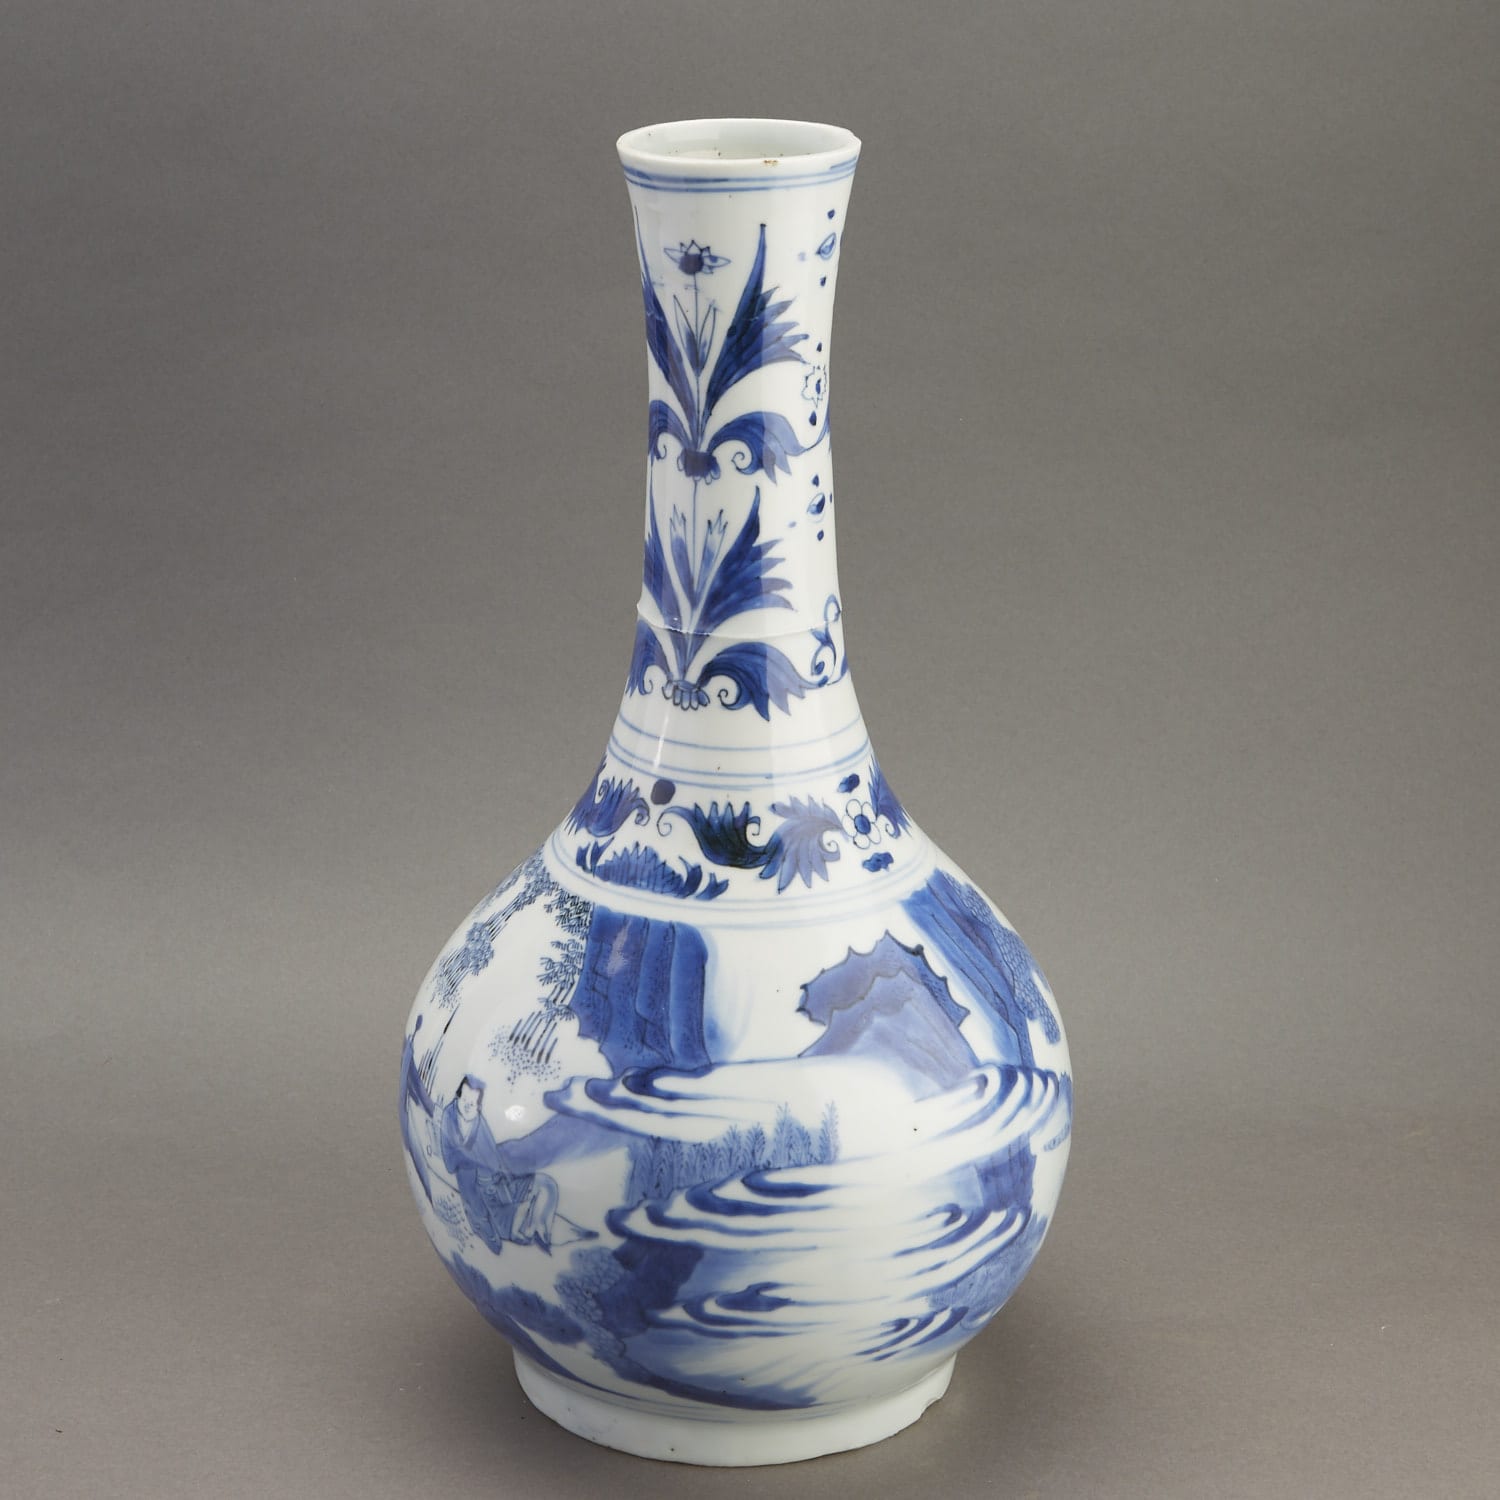 Lot 265: Chinese Transitional Blue White Porcelain Vase